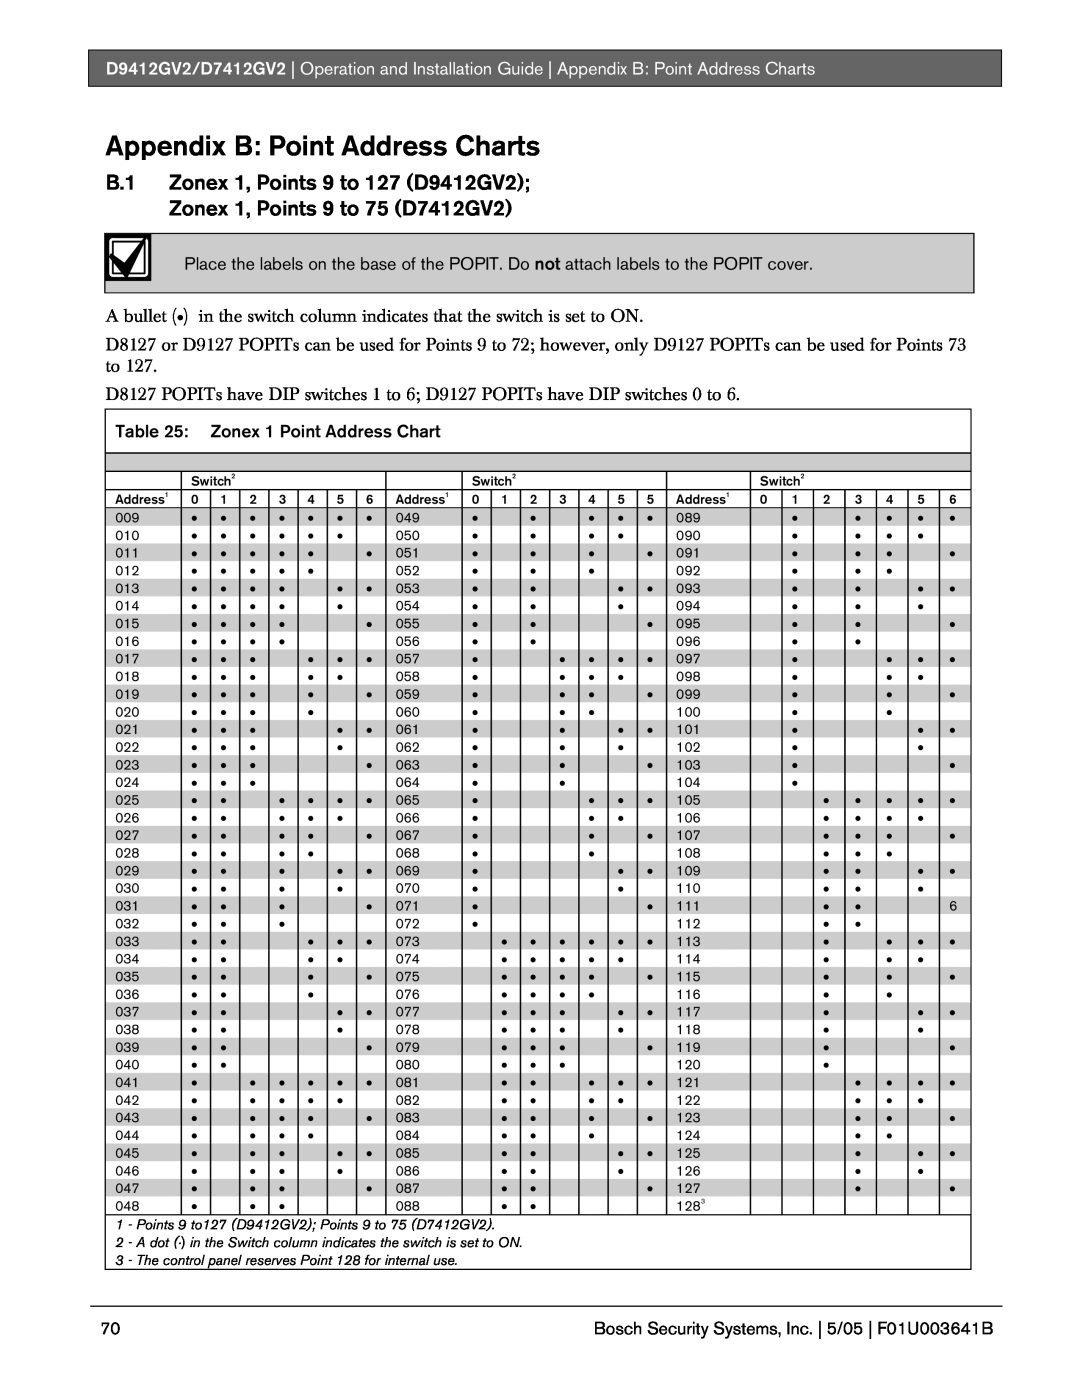 Bosch Appliances manual Appendix B: Point Address Charts, B.1 Zonex 1, Points 9 to 127 D9412GV2 